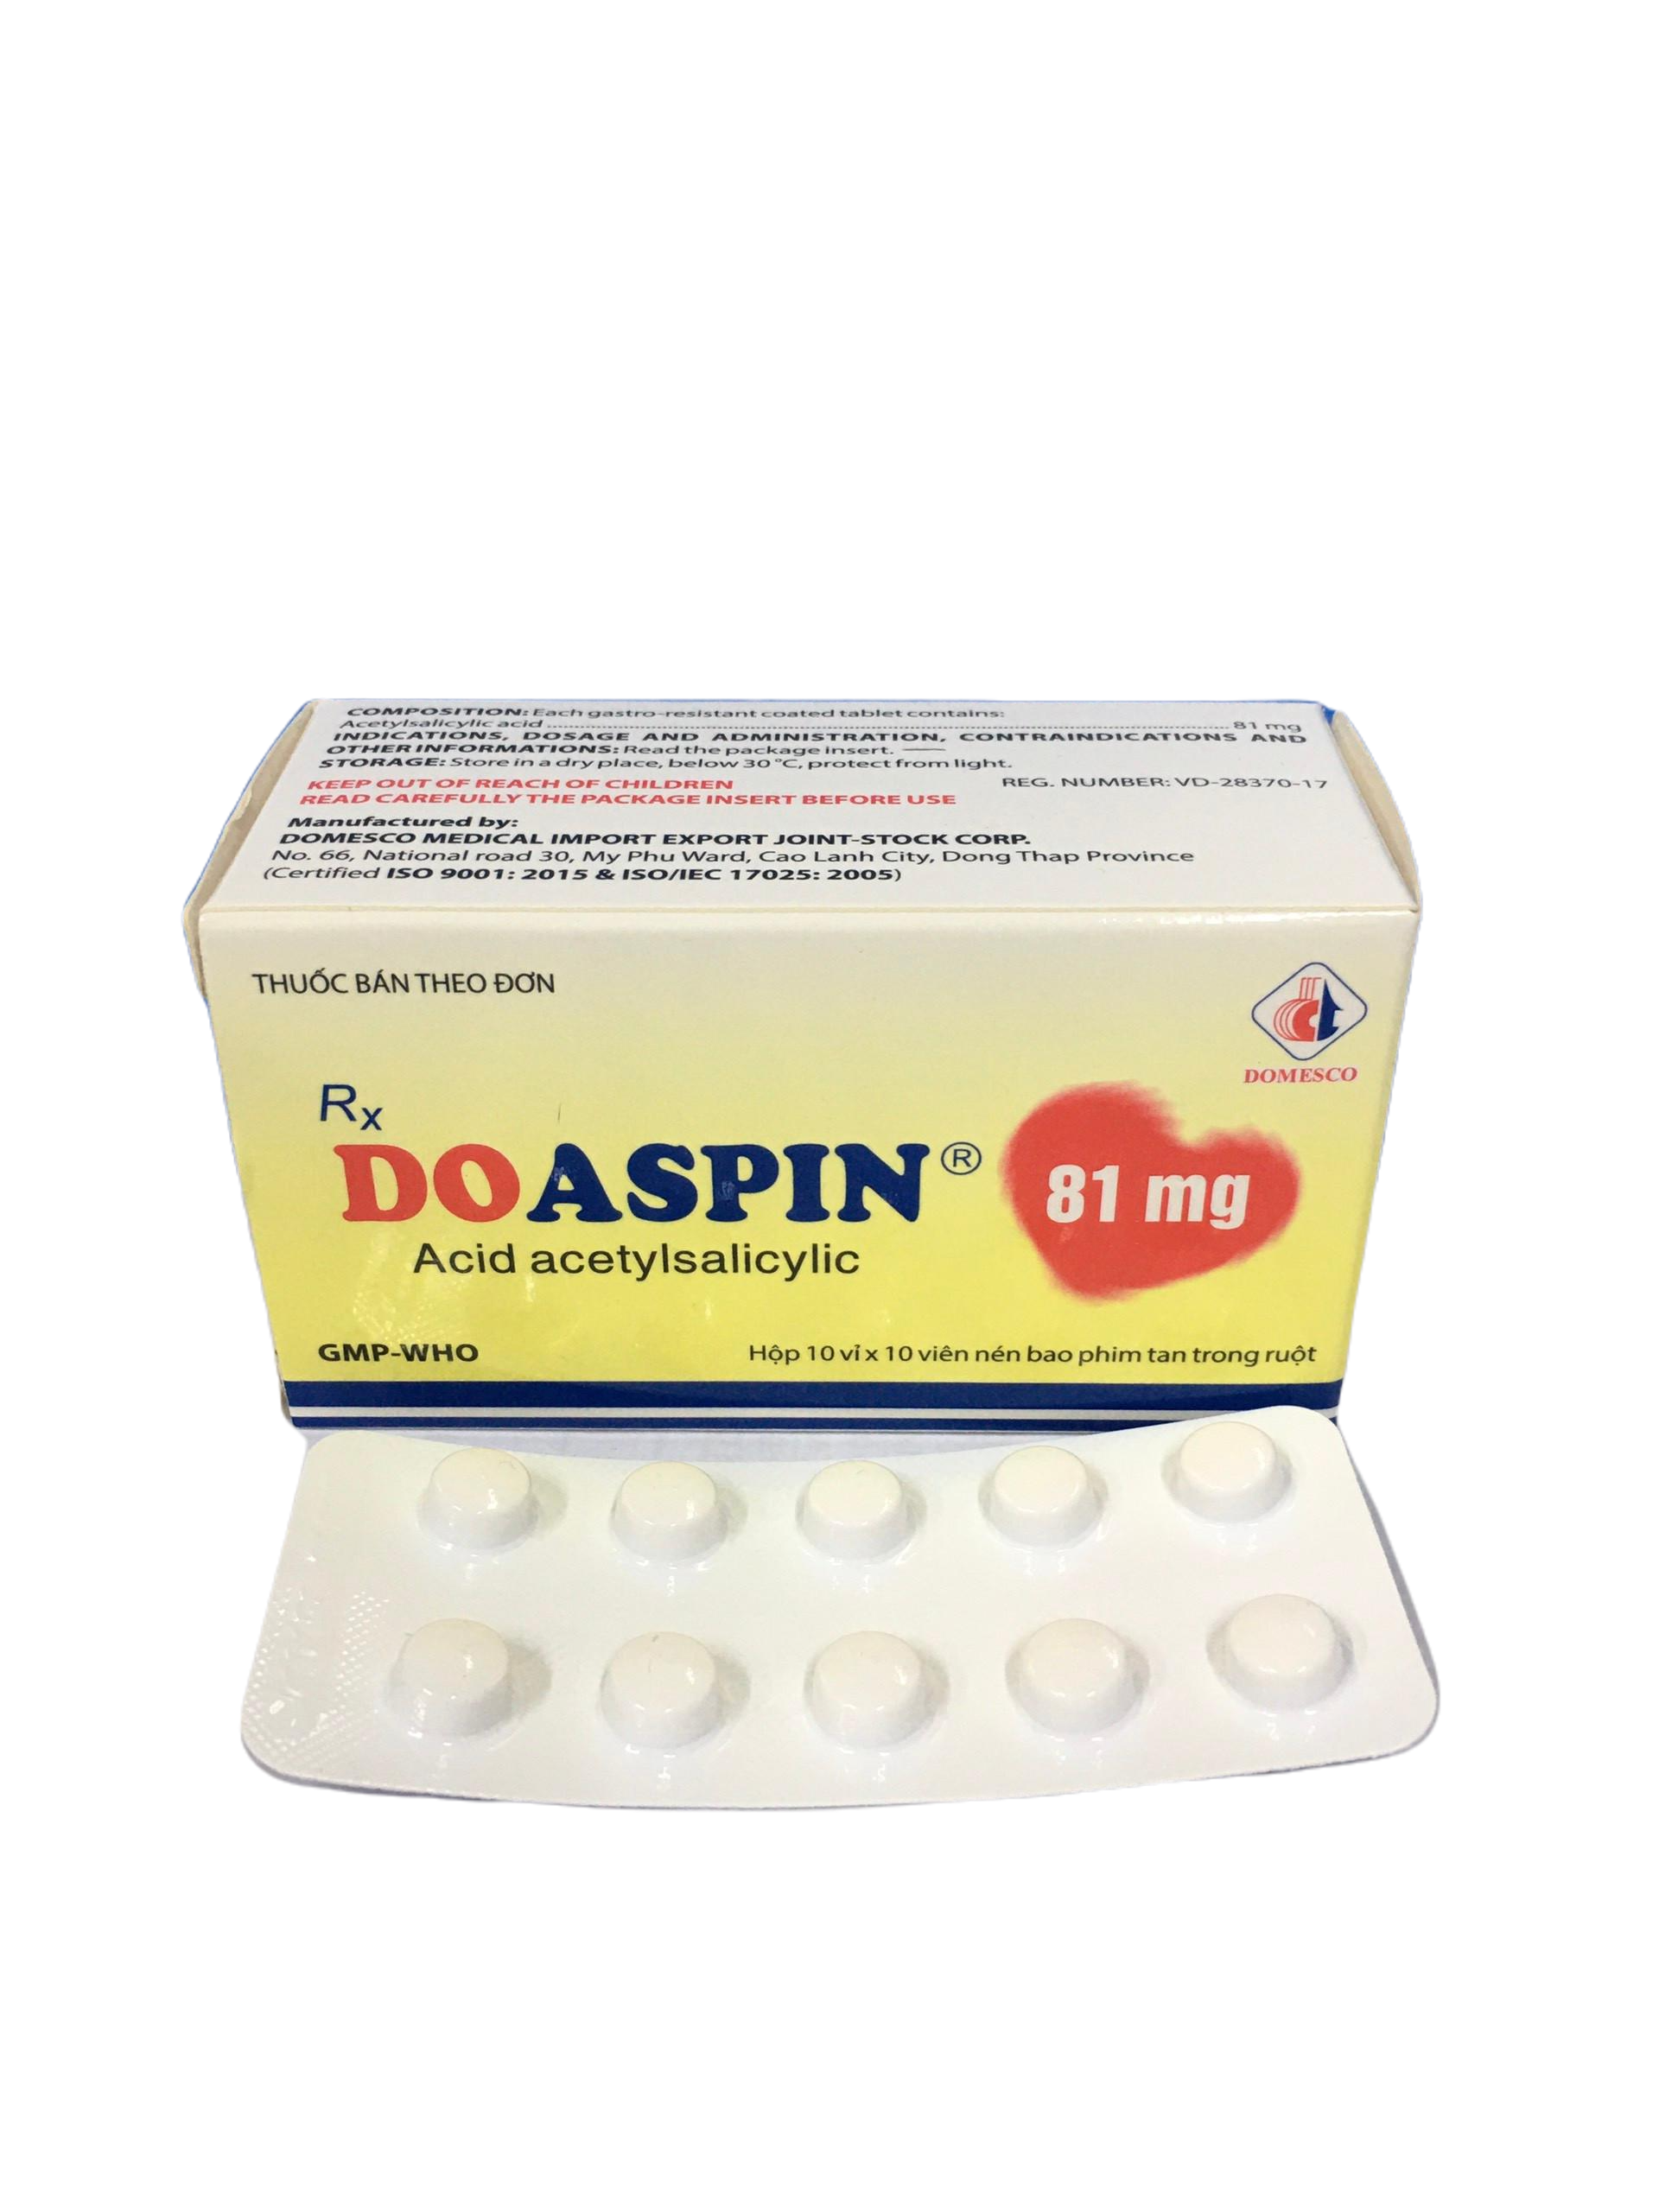 Doaspin 81mg (Aspirin) Domesco (H/100v)